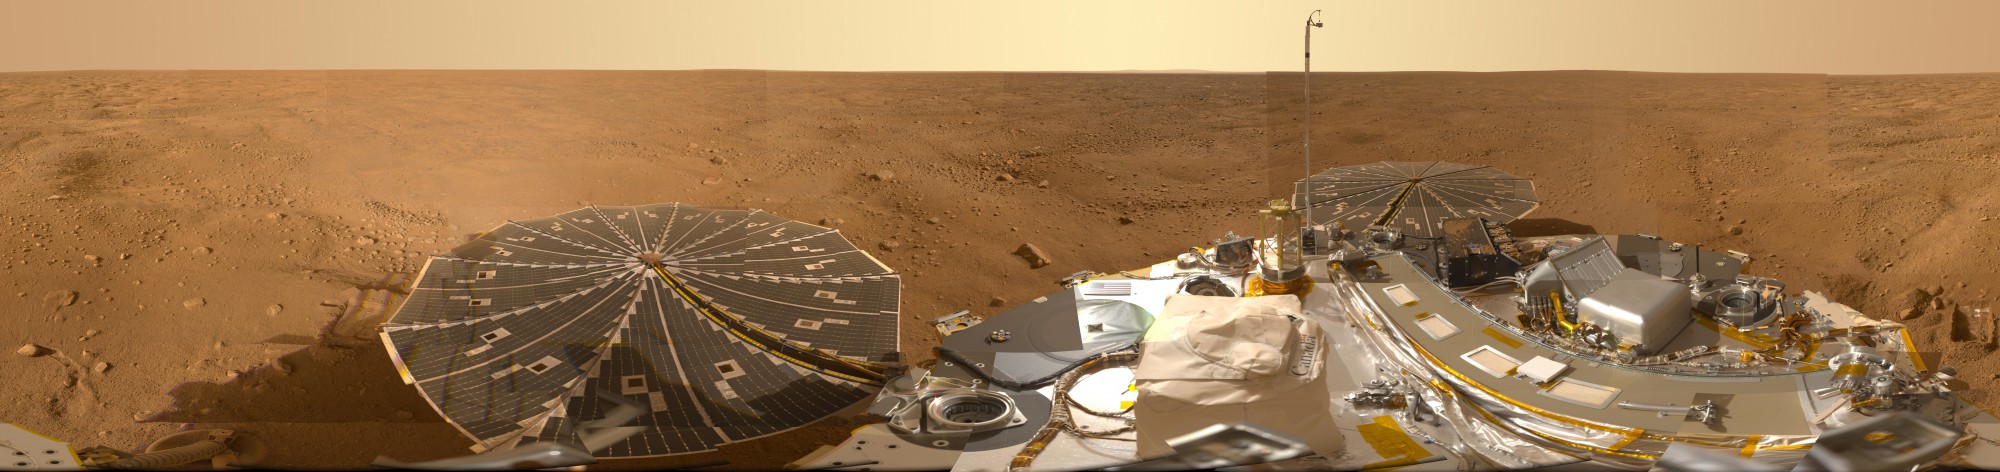 NASA - Mars Panorama (pd)